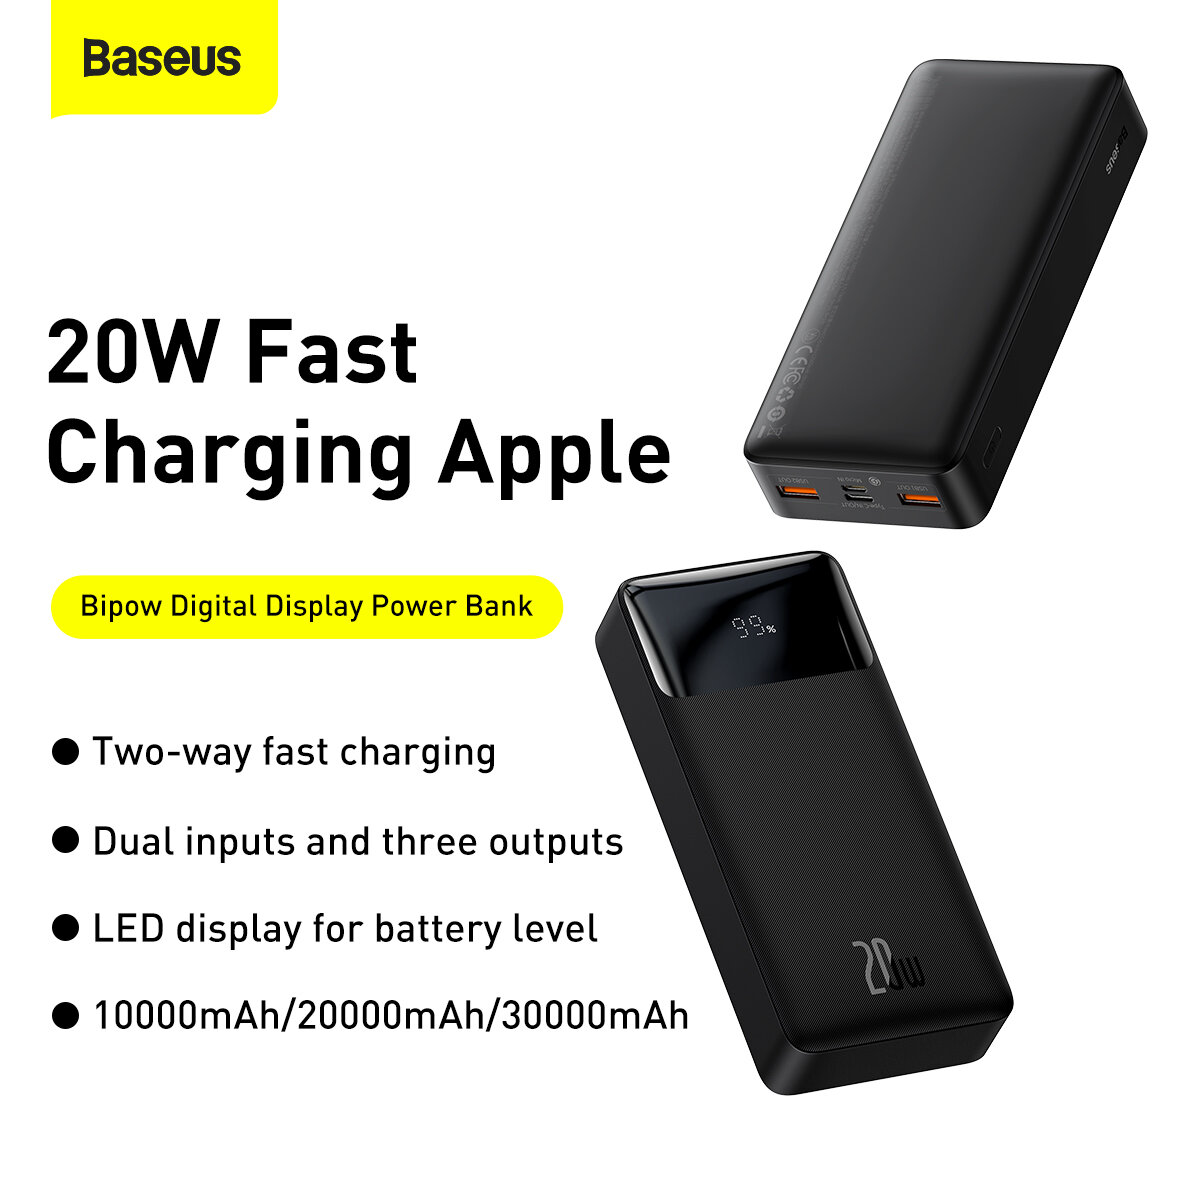 Baseus PPBD20K 20000mAh 20W PD QC Bipower Digital Display Two-Way Fast Charging Power Bank for Samsung Galaxy S21 Note S20 ultra Huawei Mate40 P50…